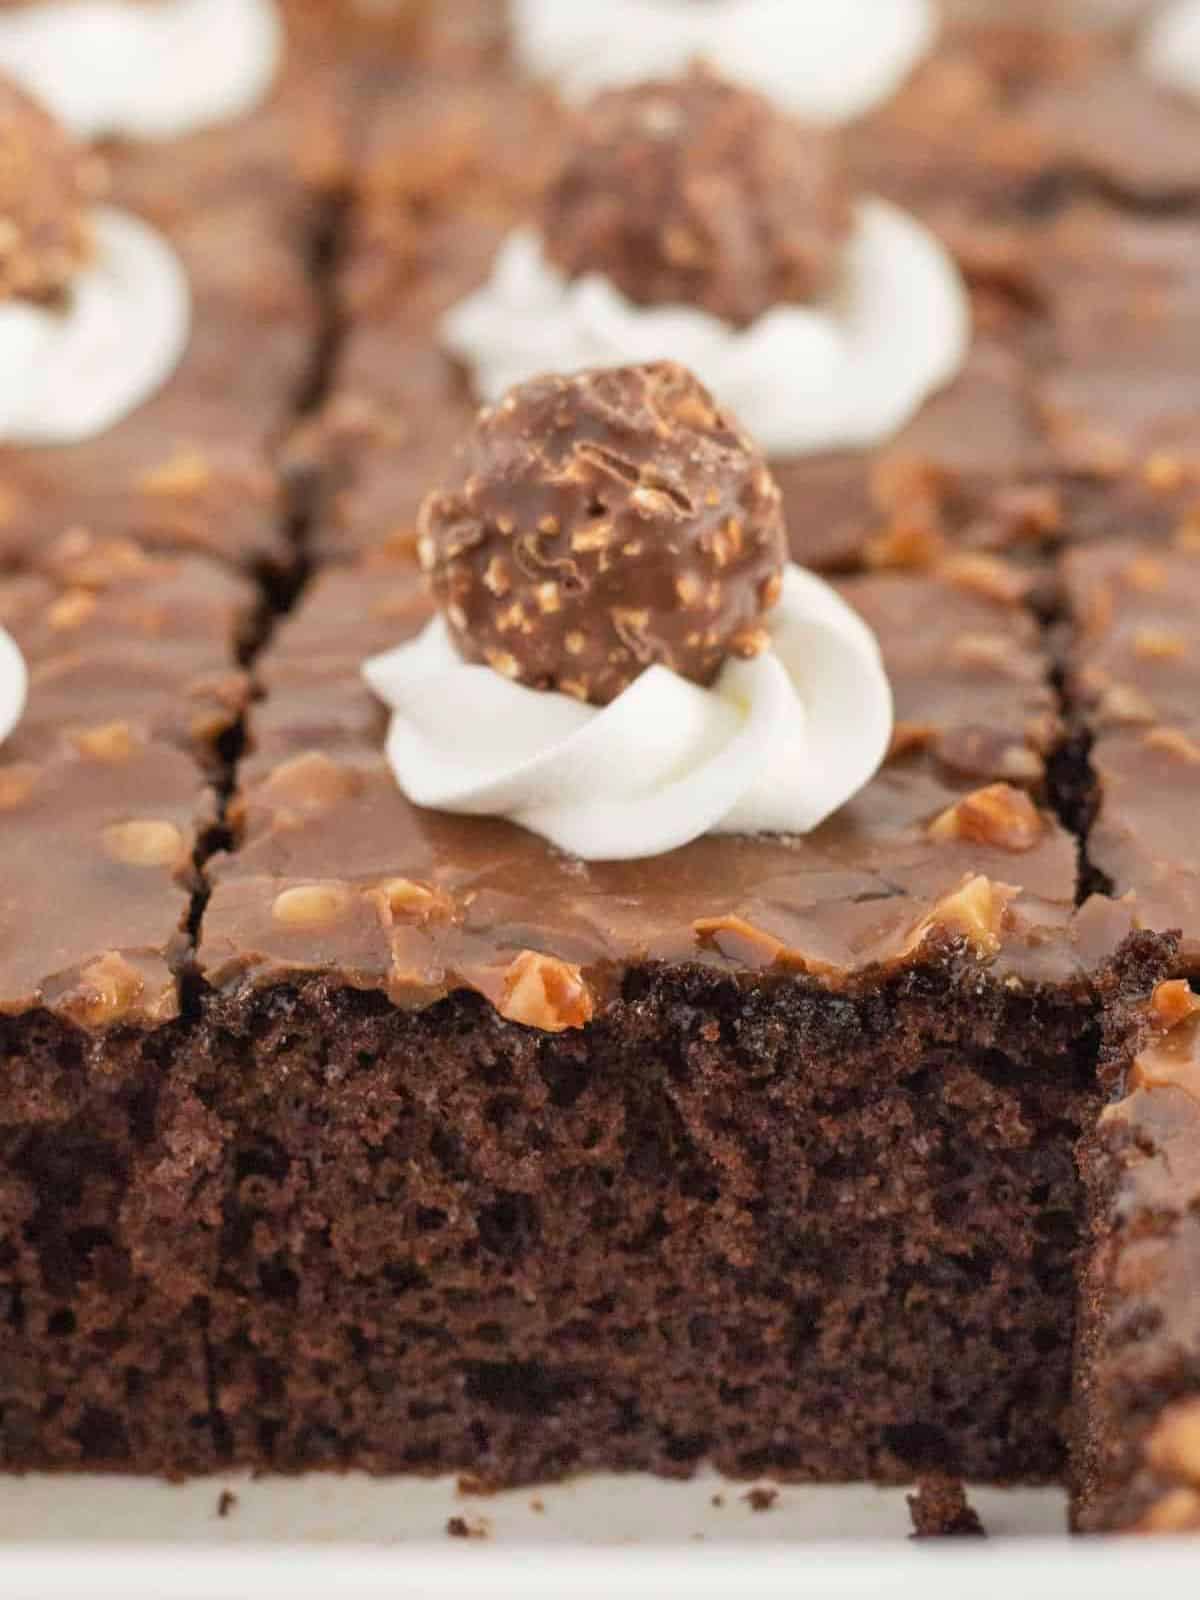 Ferrero Rocher cake made with a cake mix with an amazing chocolate hazelnut frosting.